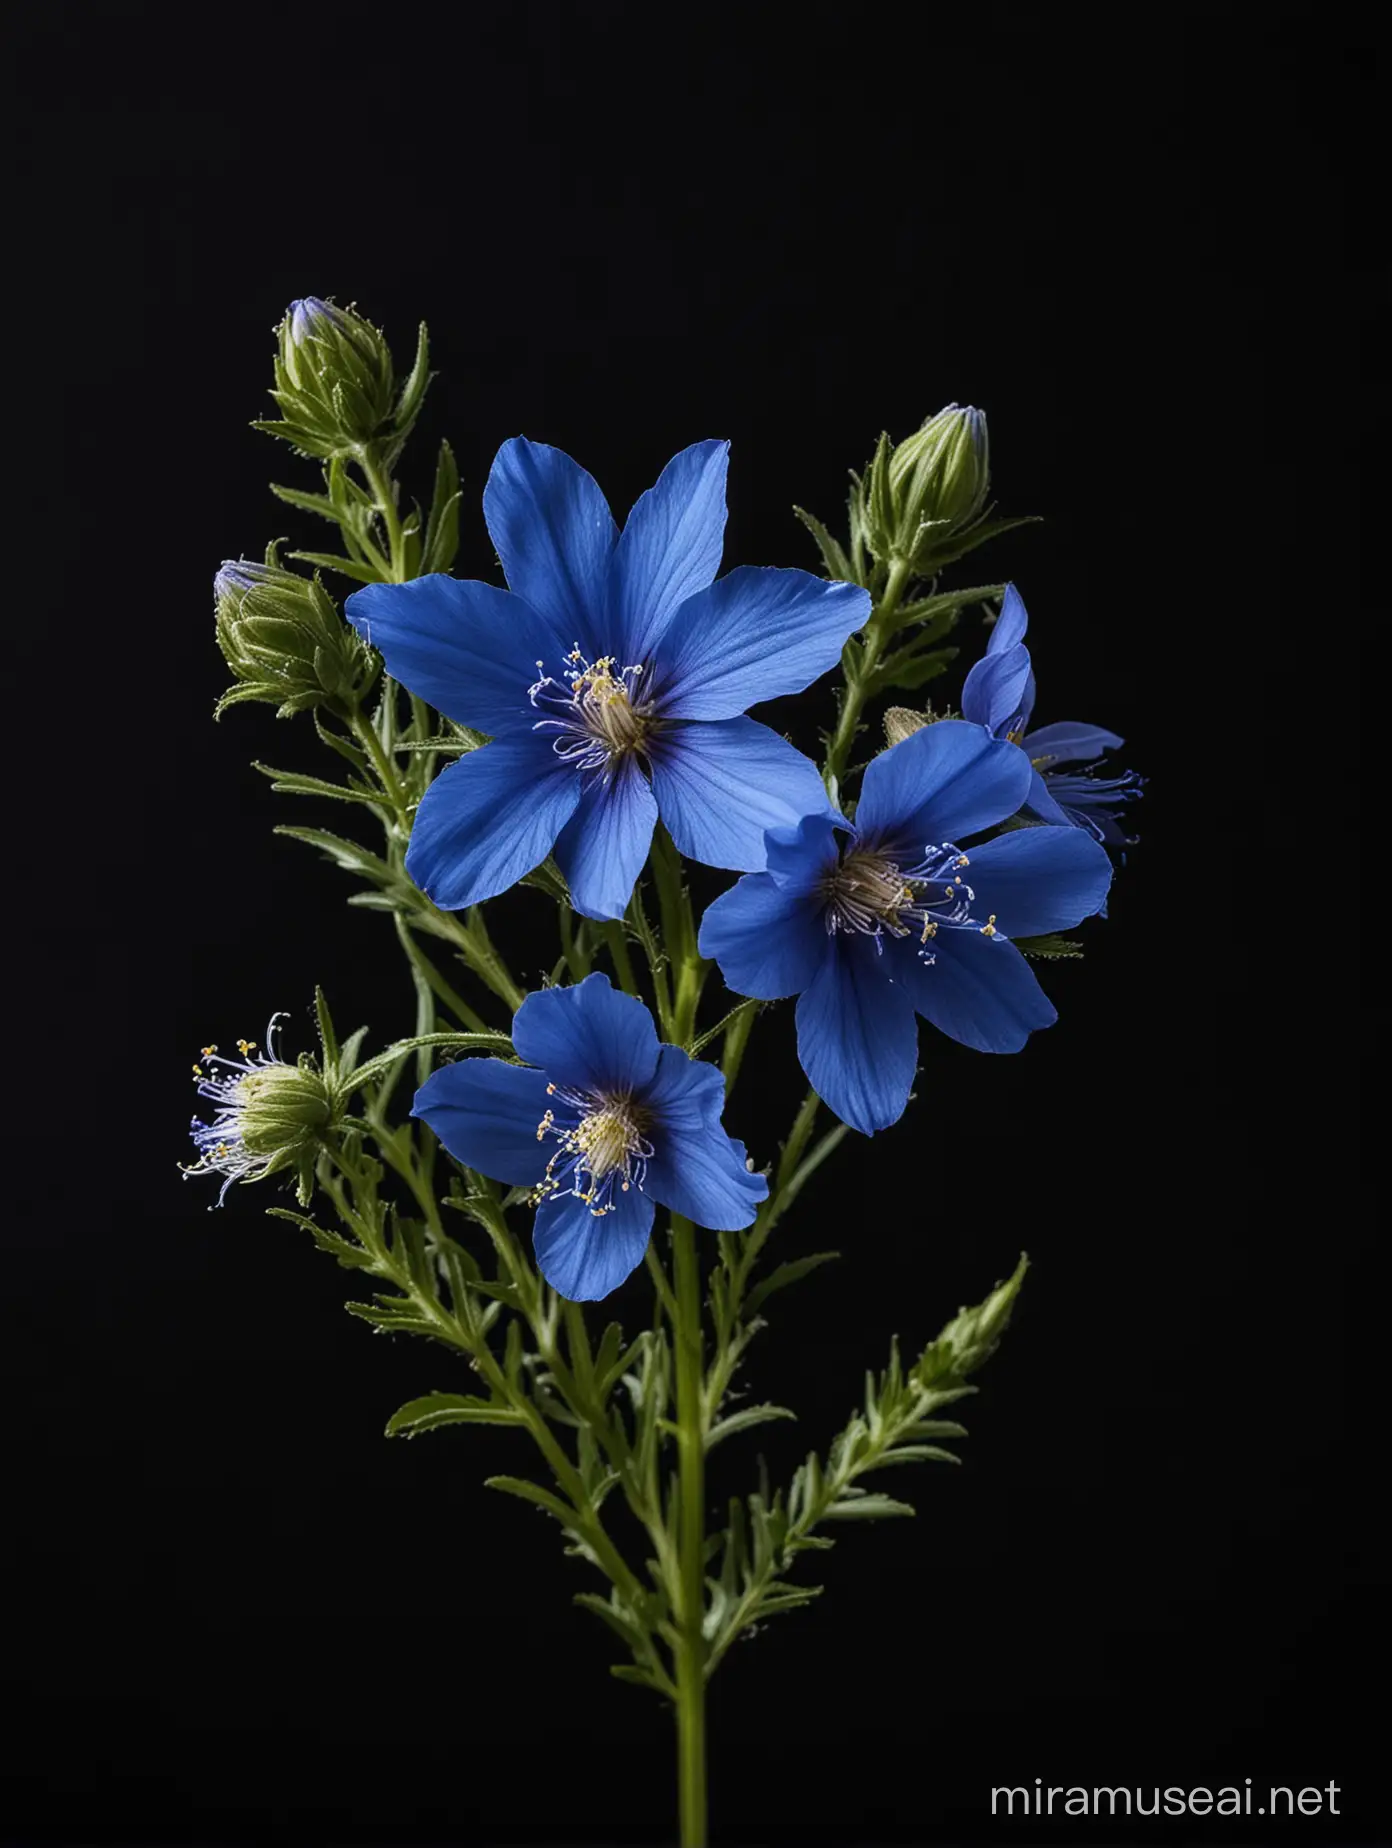 Vibrant Wild Blue Flowers on Dark Background